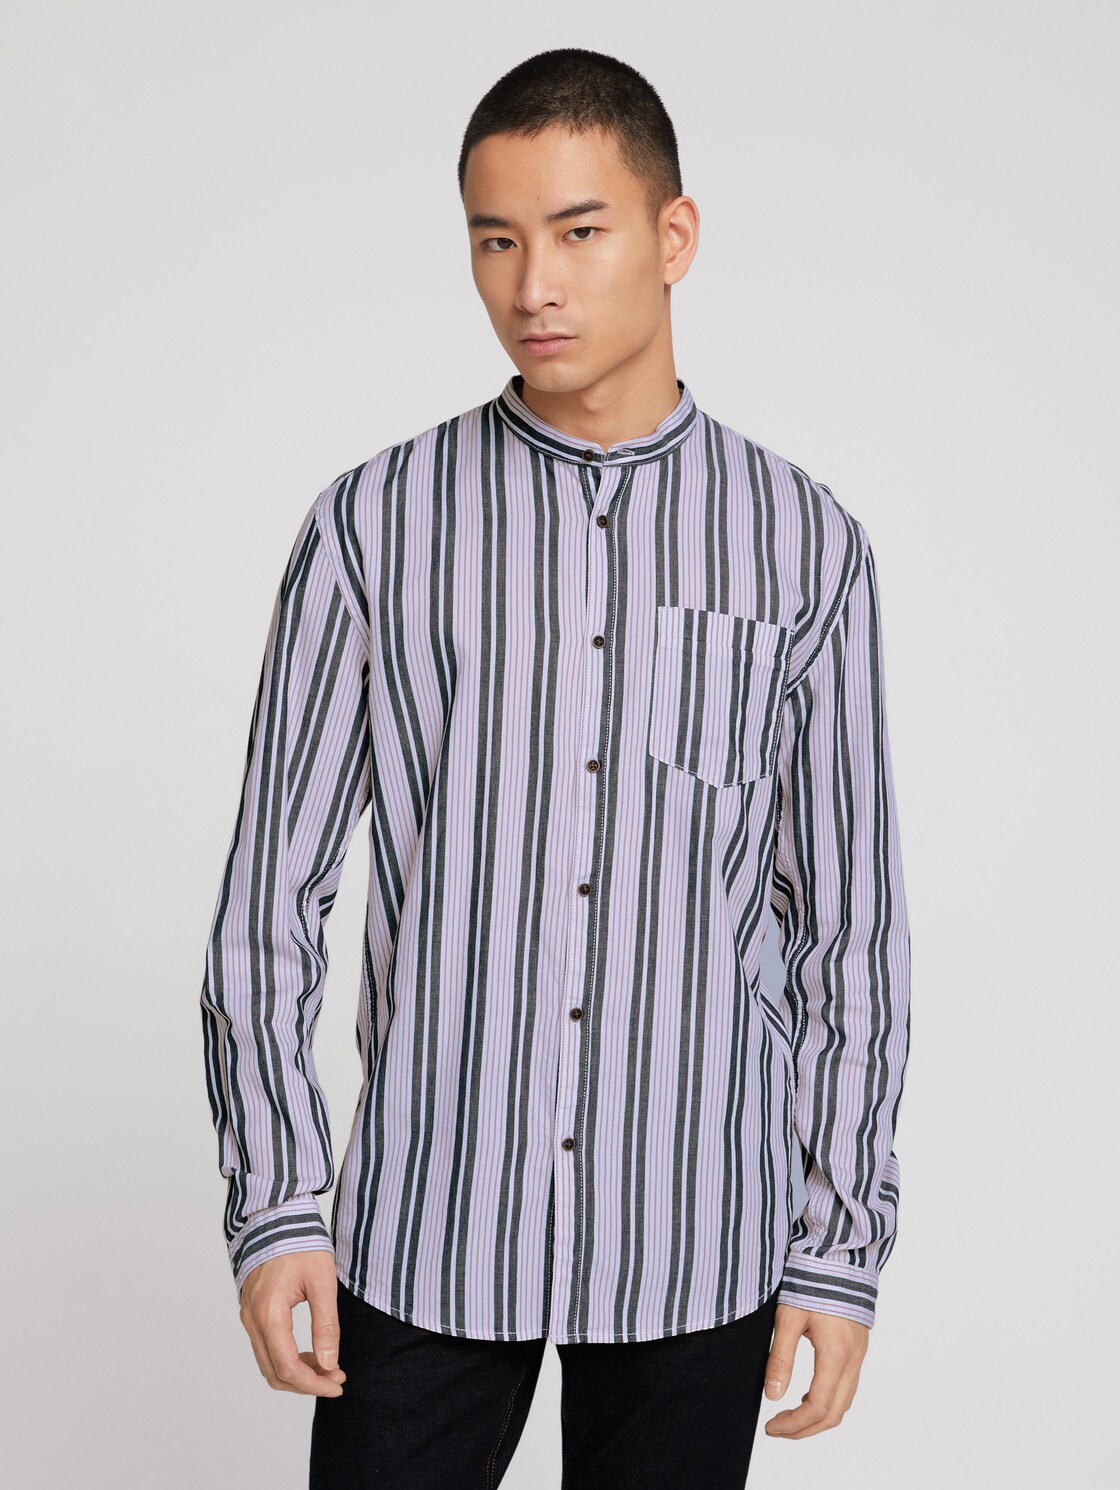 TOM TAILOR DENIM overhemd met patroon en opstaande kraag, navy berry big stripe, L